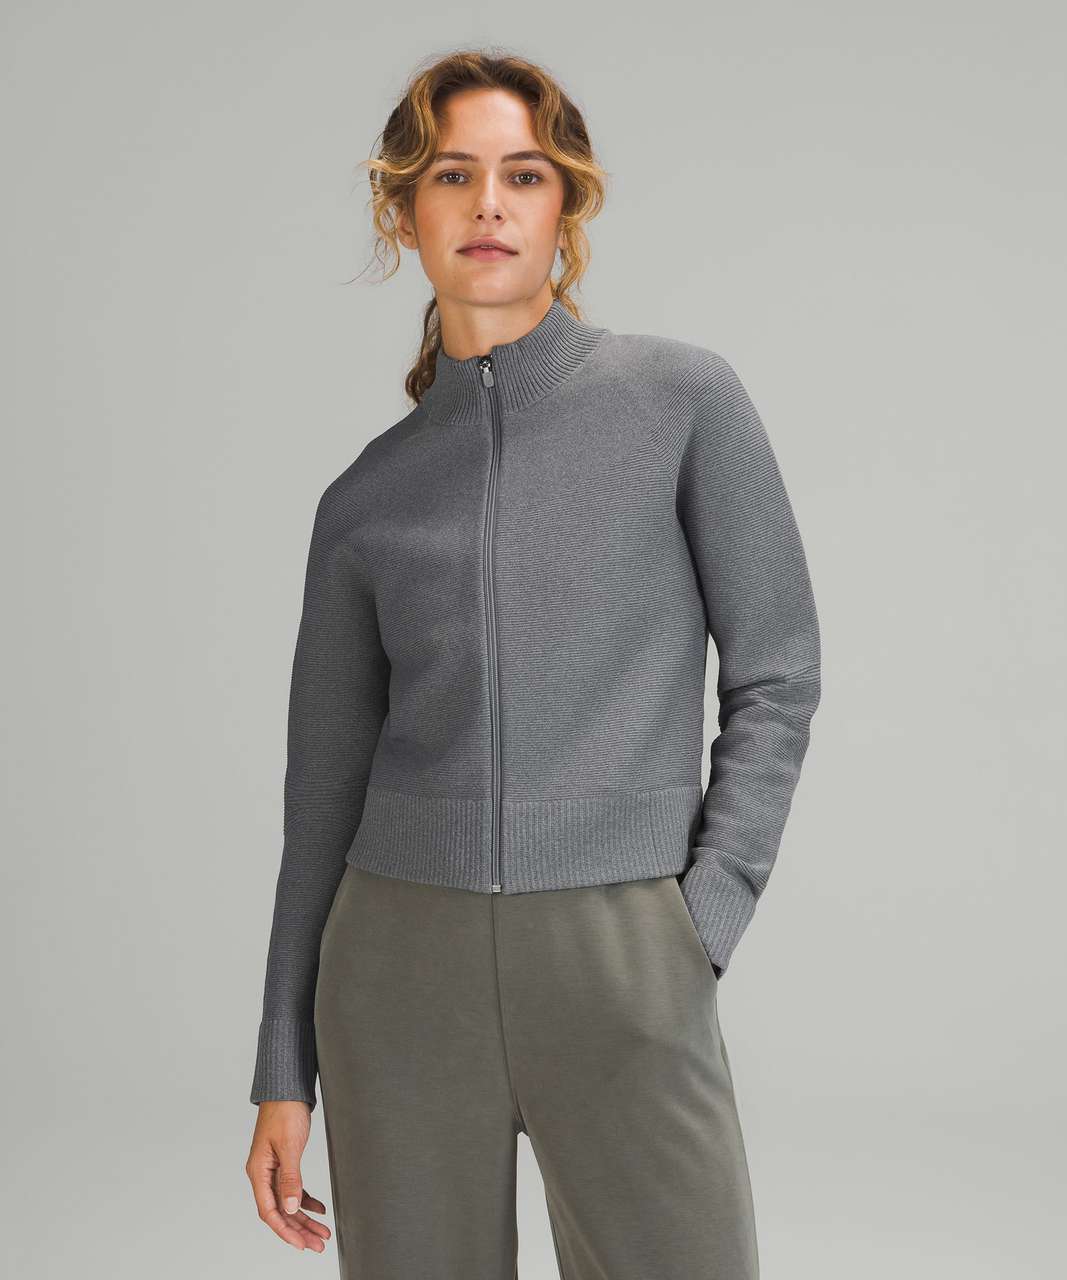 Lululemon All Around Full Zip Sweater - Rhino Grey / Asphalt Grey